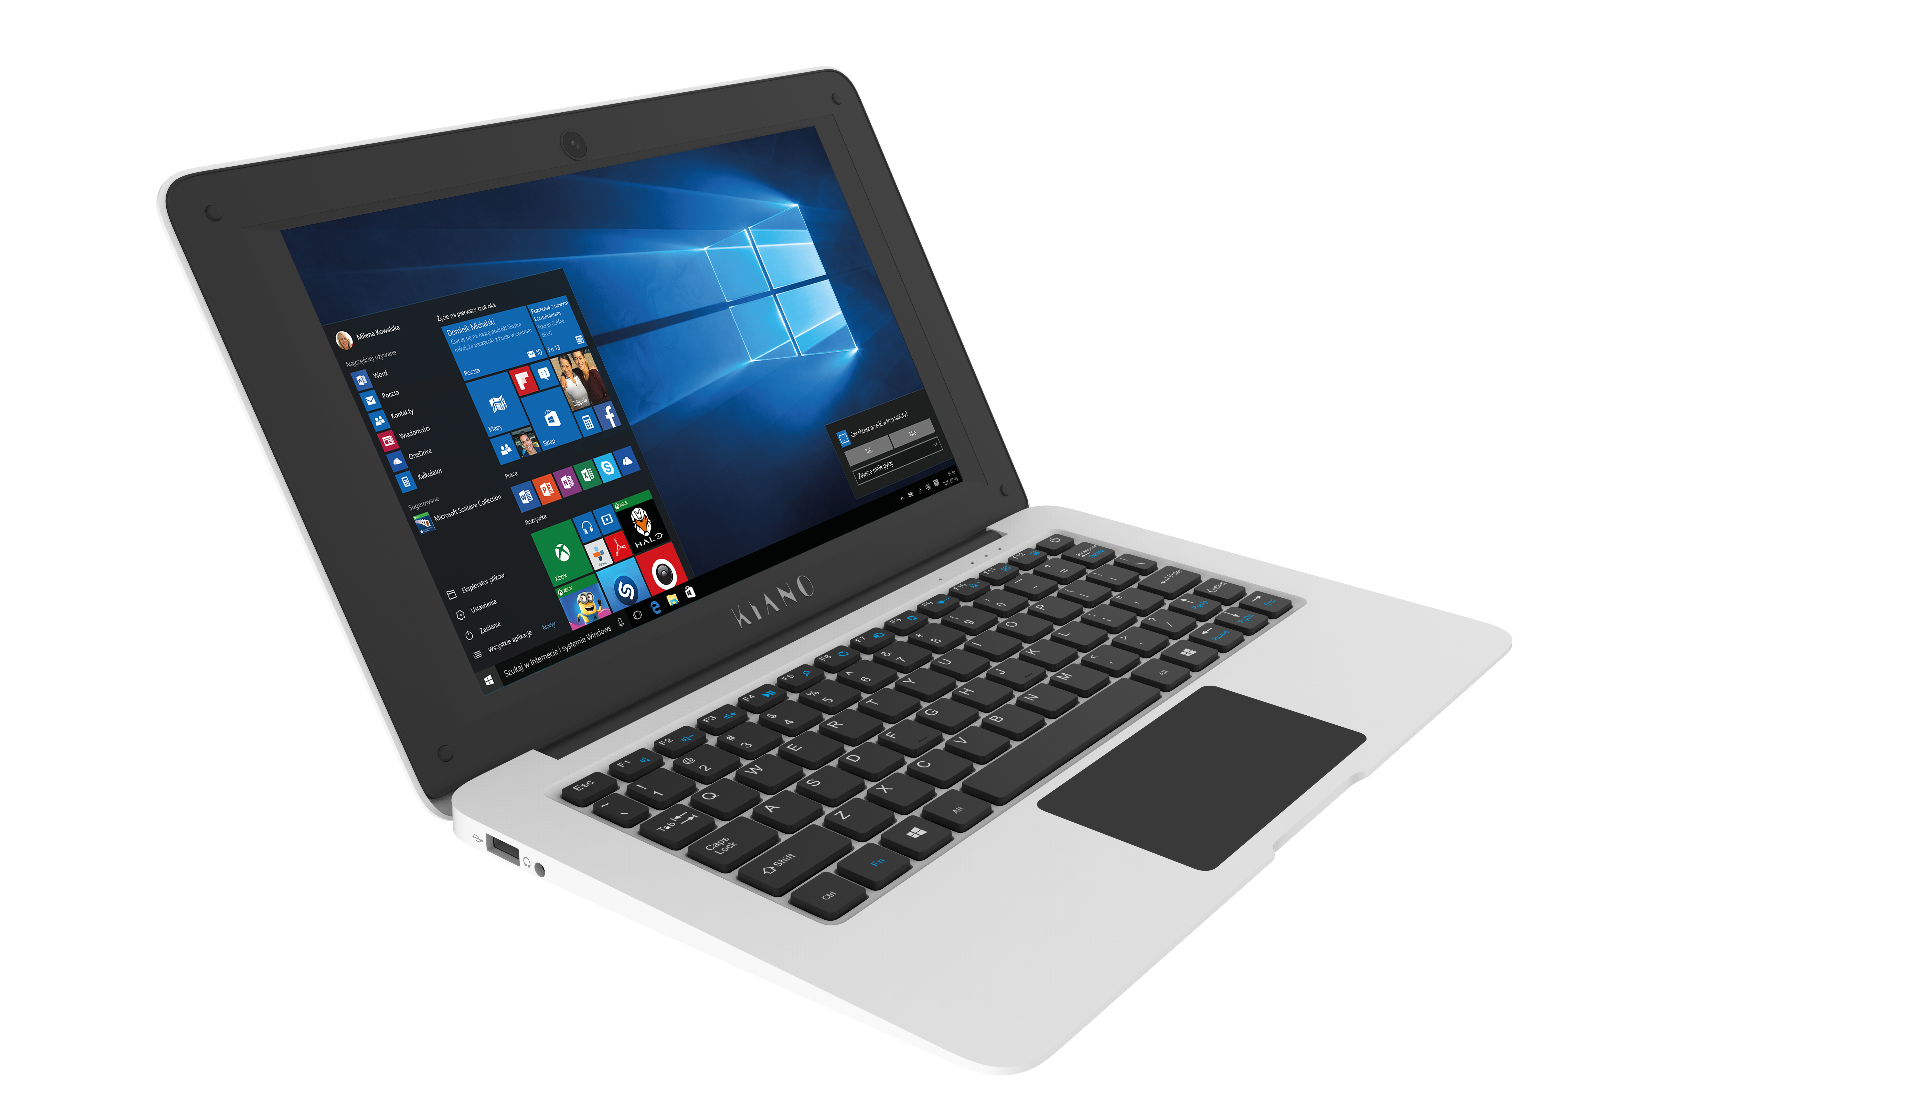 Laptop Kiano SlimNote 10.1 Mini cu procesor Intel Atom BayTrail-T Z3735G, HD Graphics 646 MHz, Silver